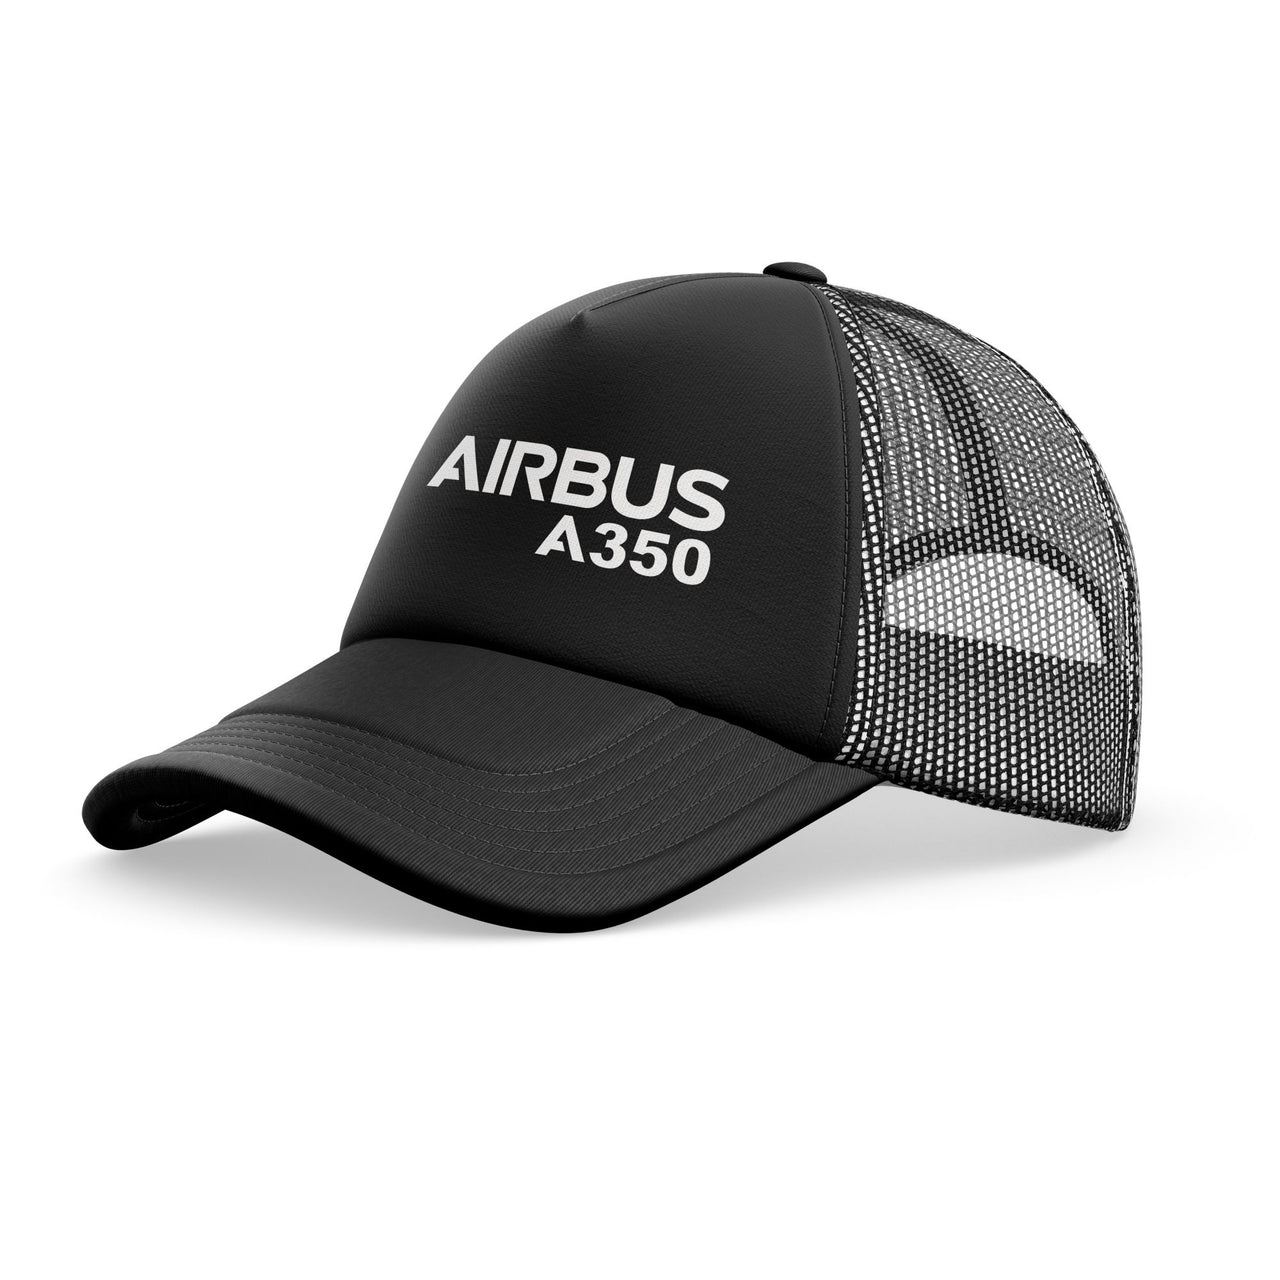 Airbus A350 & Text Designed Trucker Caps & Hats